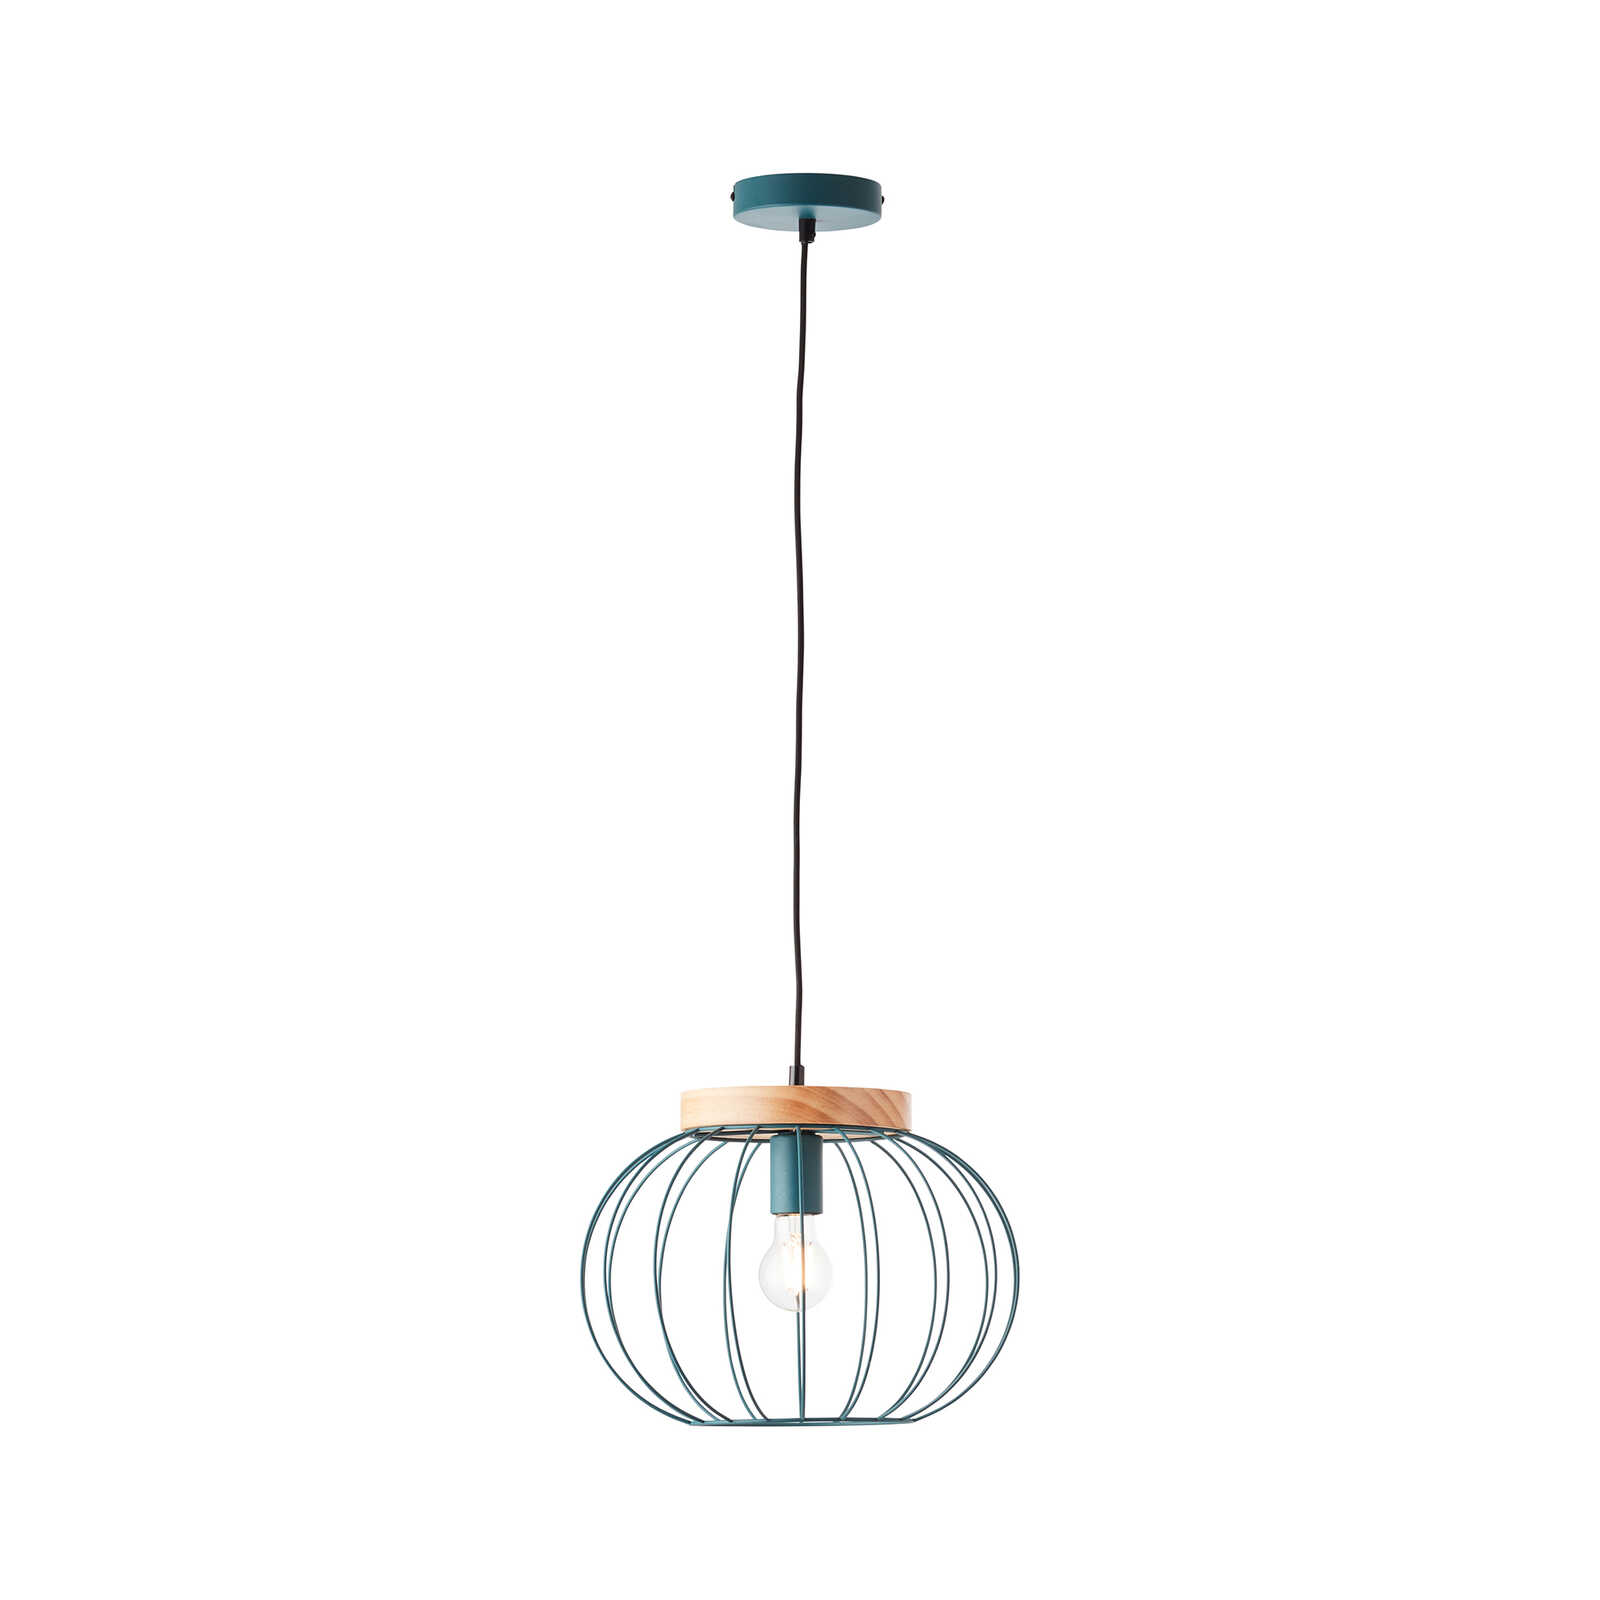 Houten hanglamp - Oliver 1 - Blauw
